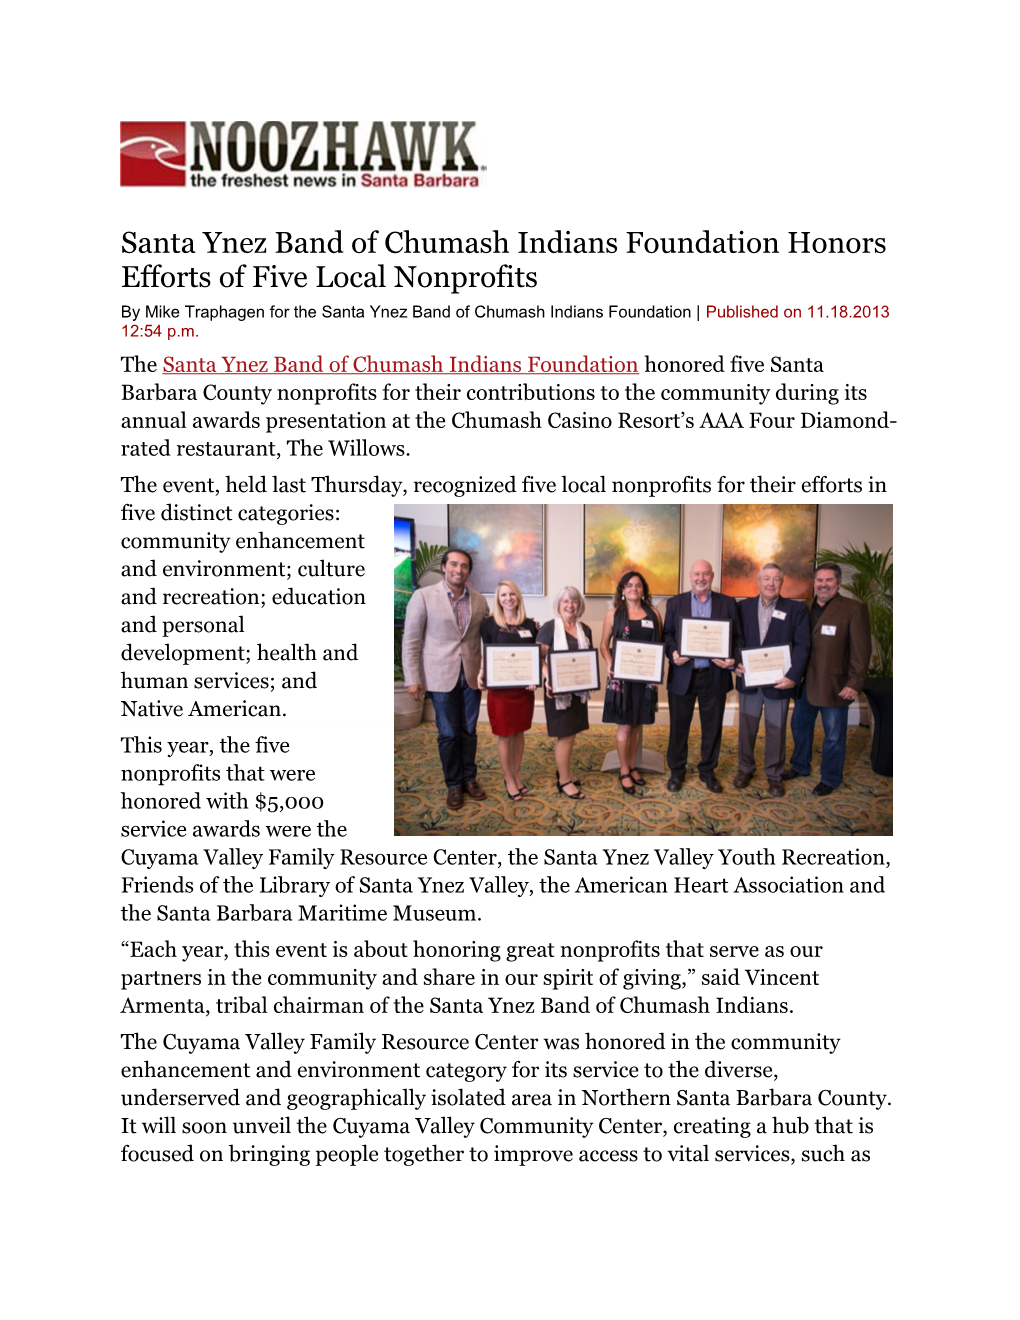 Santa Ynez Band of Chumash Indians Foundation Honors Efforts of Five Local Nonprofits